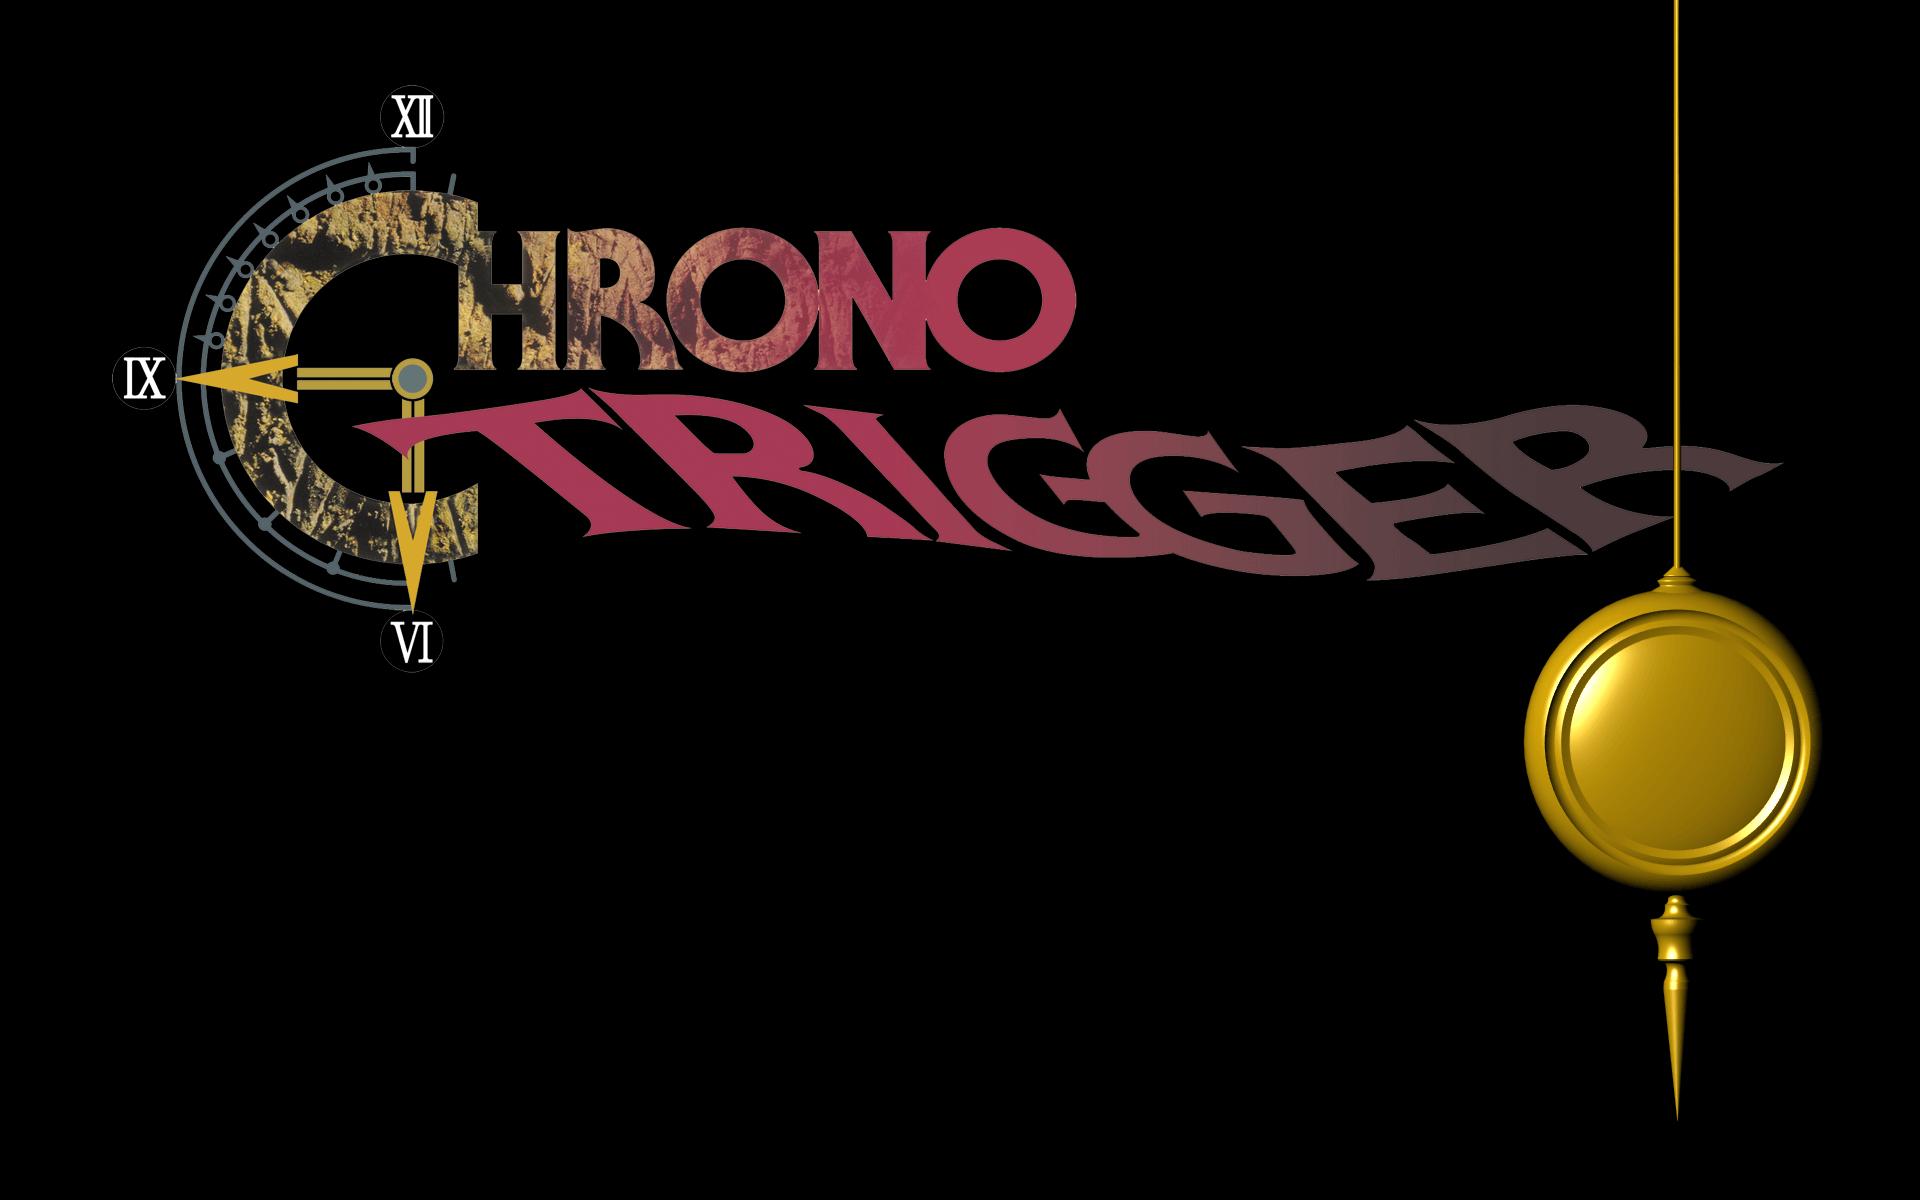 Chrono Trigger Wallpaper 4k Pc, Chrono Trigger, Game